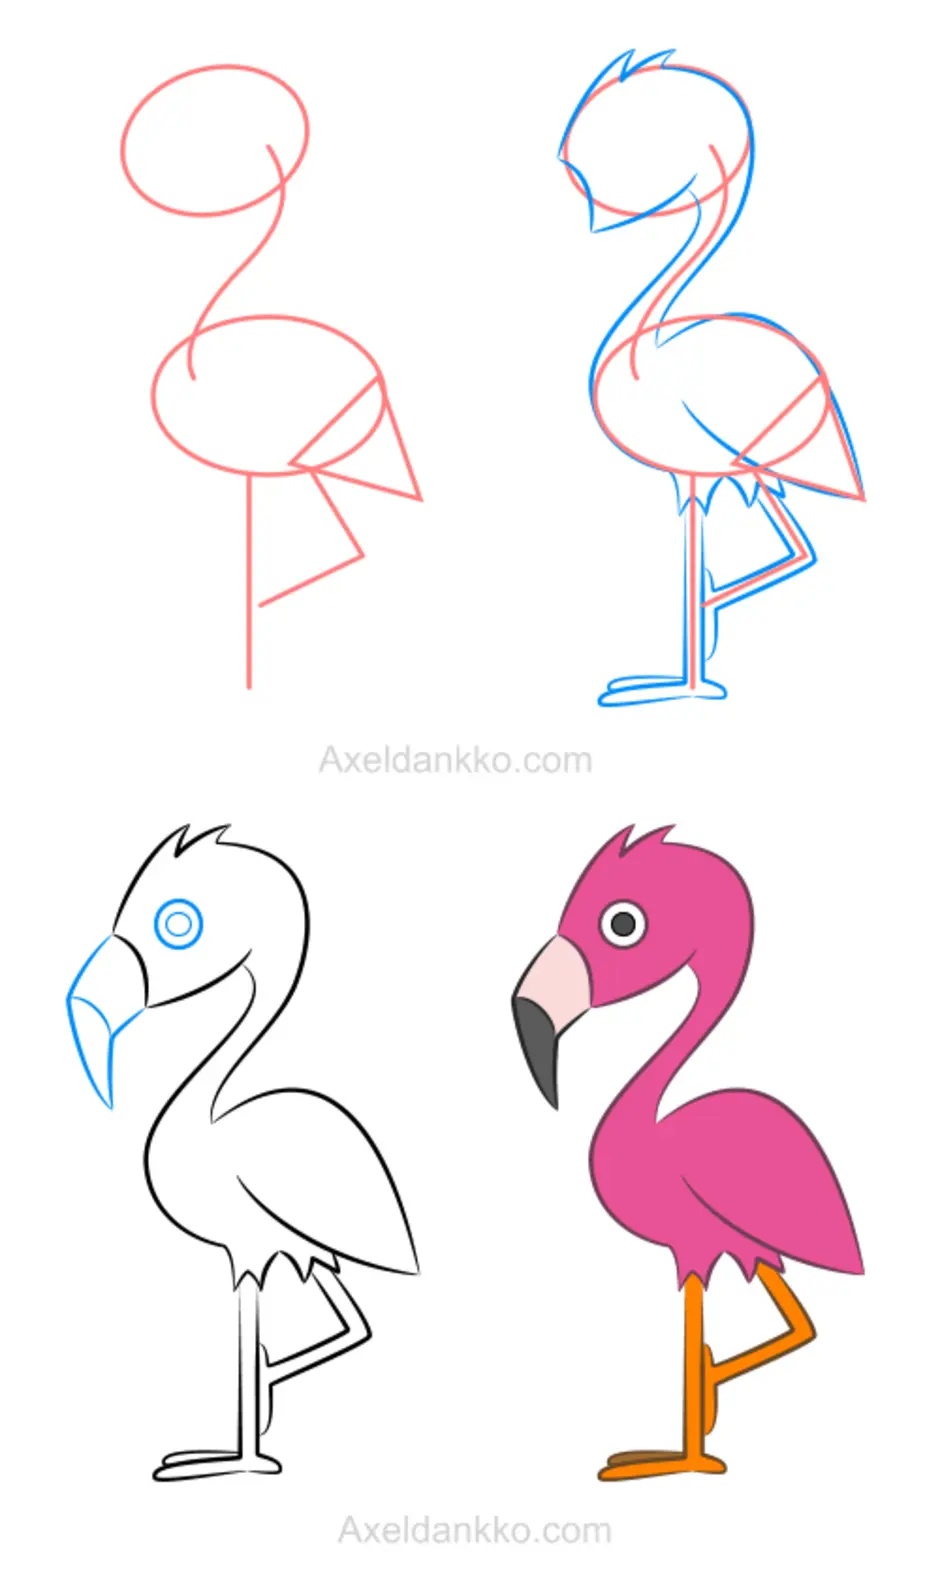 Фламинго легко. Какинарисовать Фламинго. Поэтапное рисование Фламинго для детей. Фламинго карандашом. Фламинго пошагово рисунок.